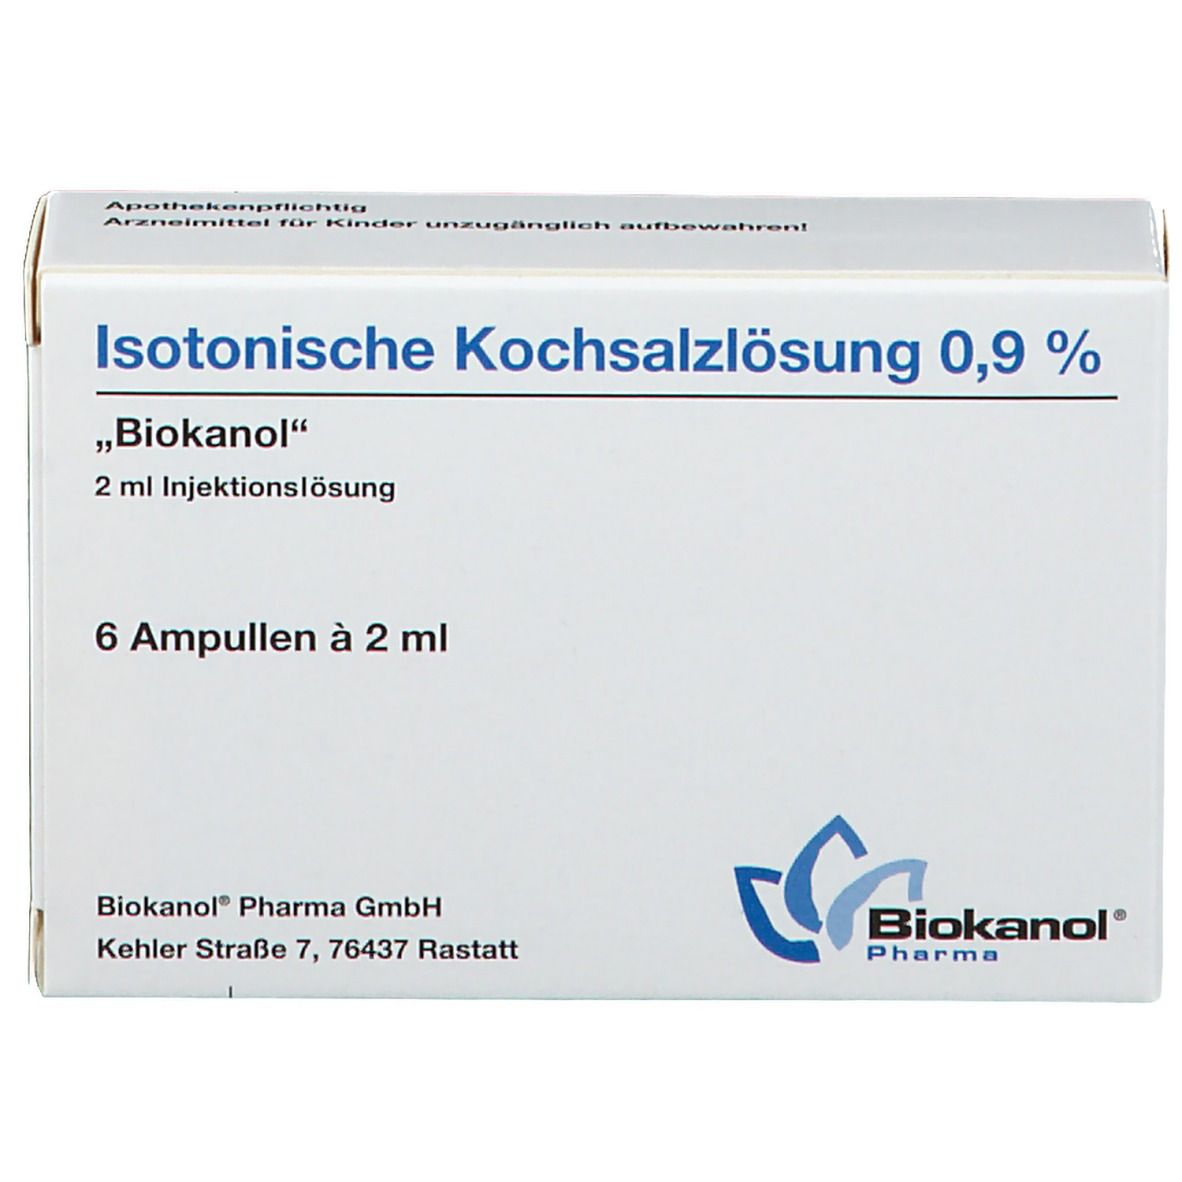 Isotonische Kochsalzlösung 0,9 % Biokanol